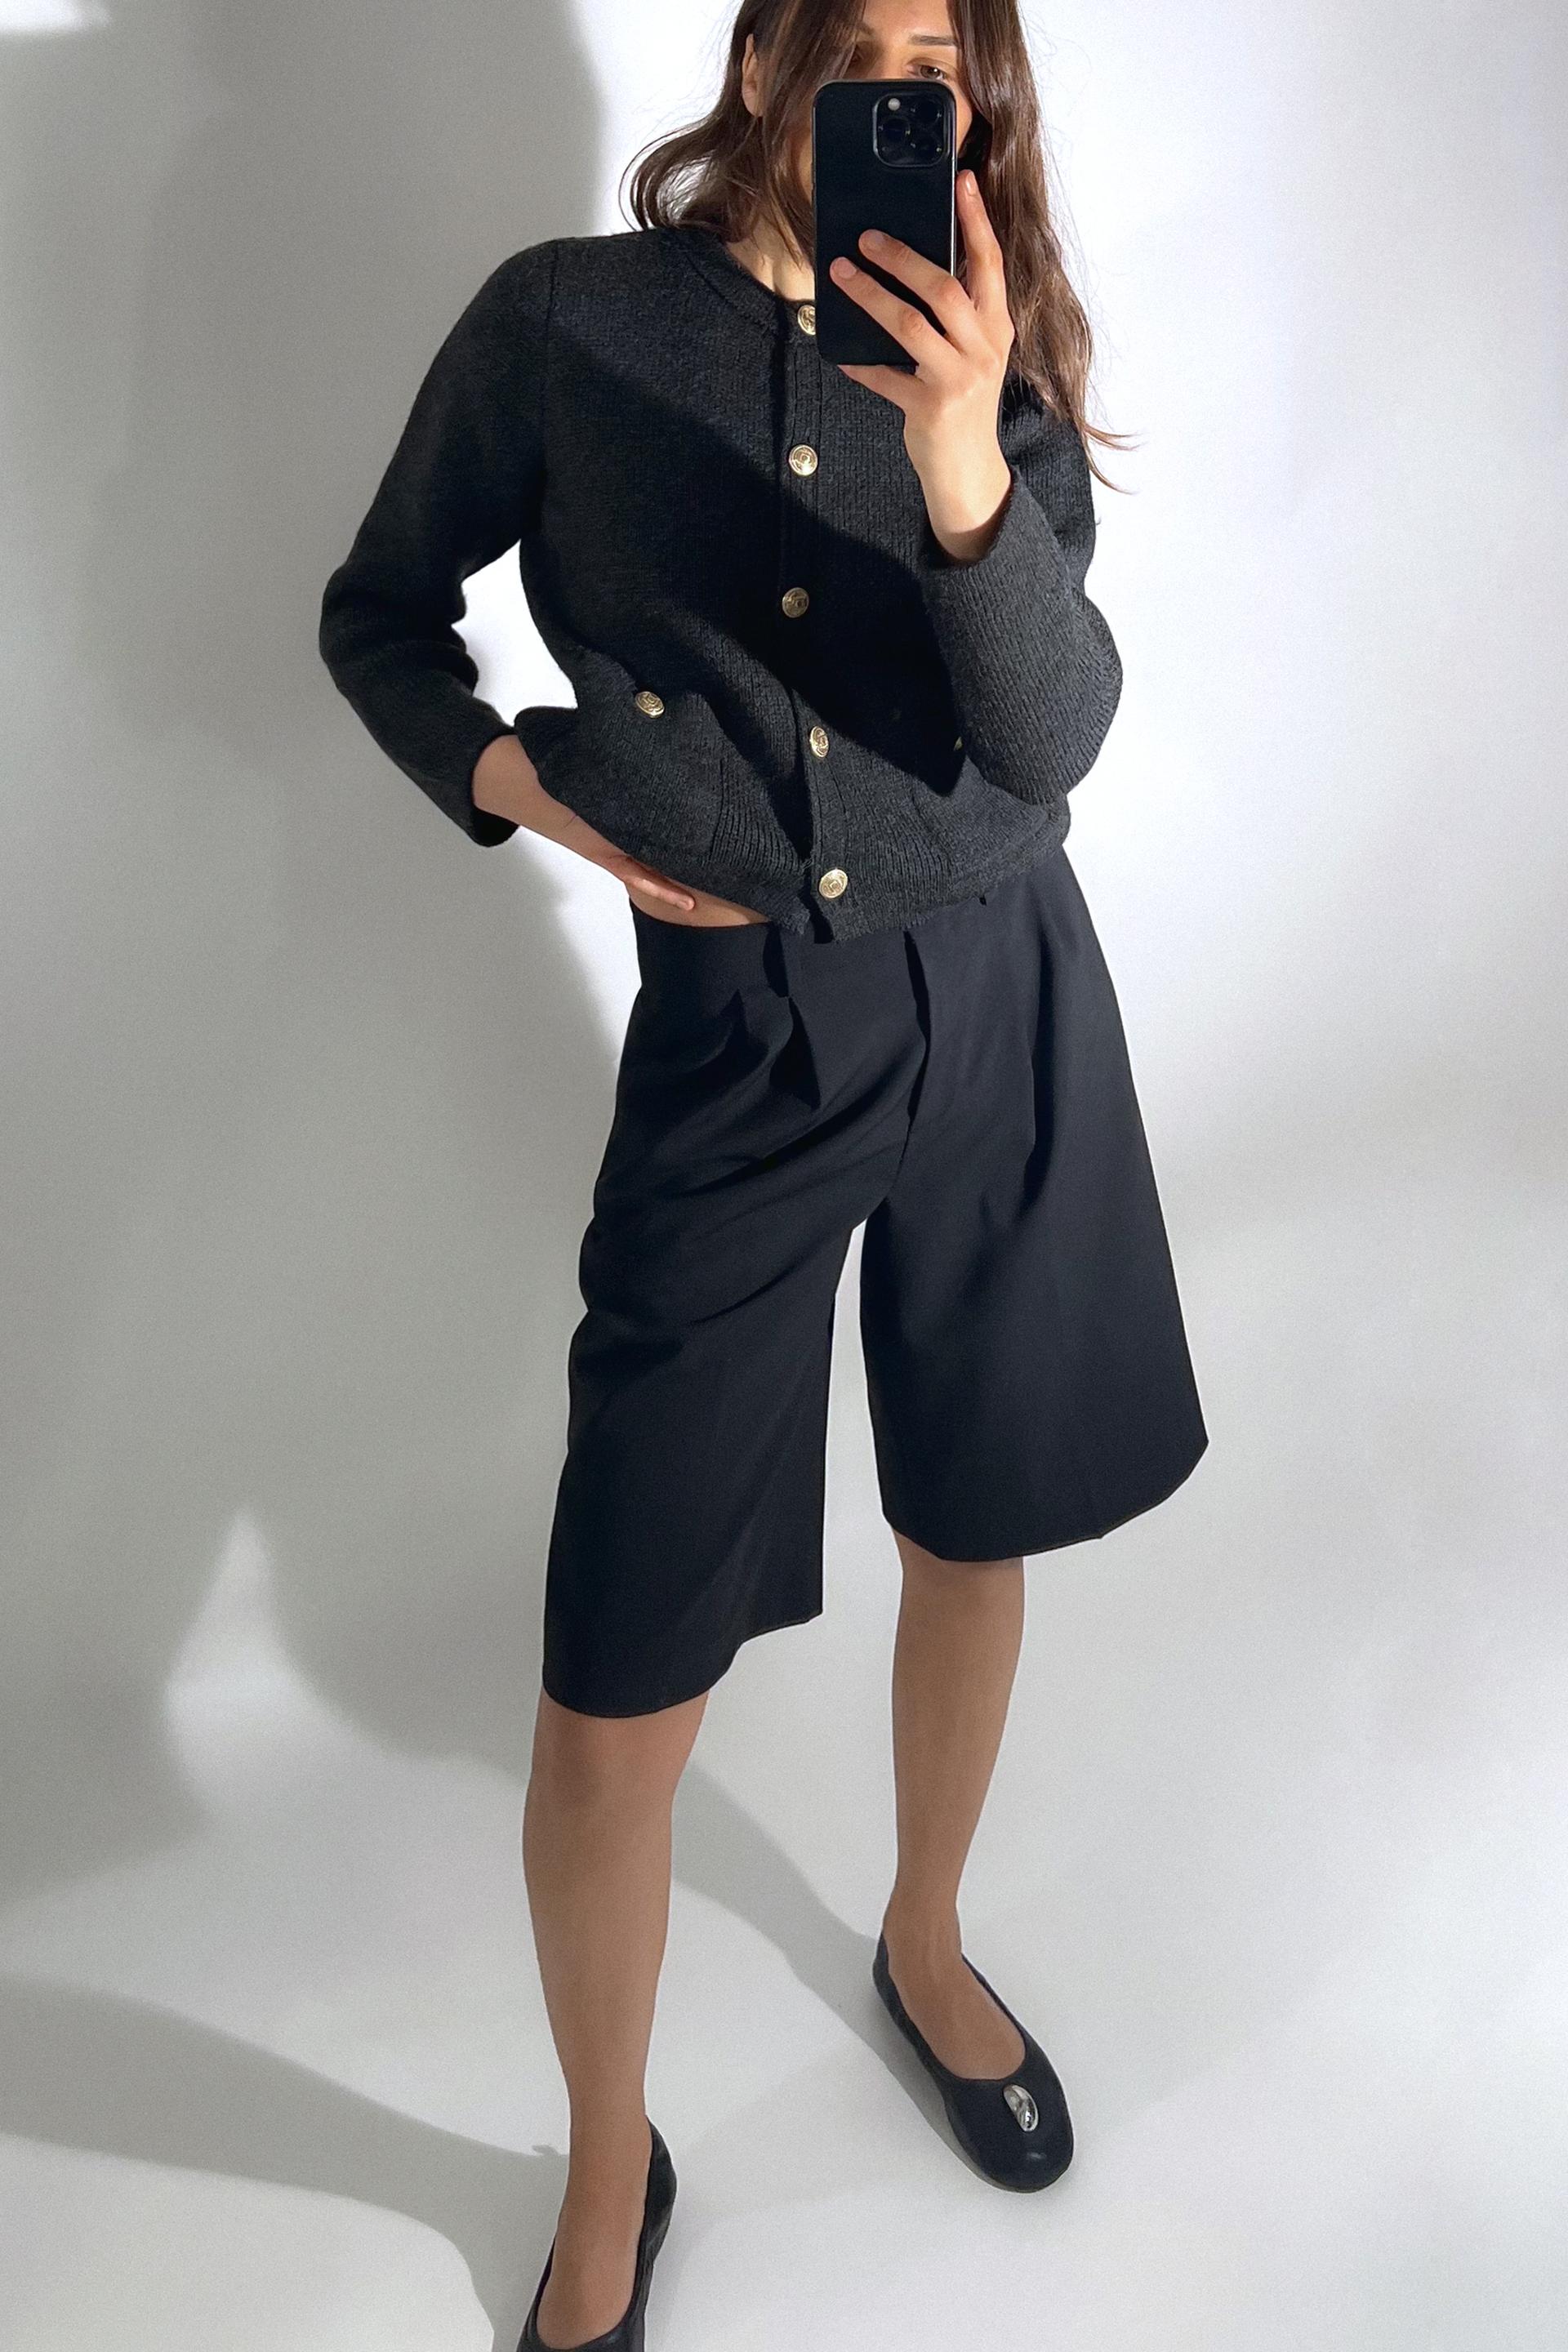 Zara Women Twist knit cardigan 6873/001/730 (Small): Buy Online at Best  Price in UAE 